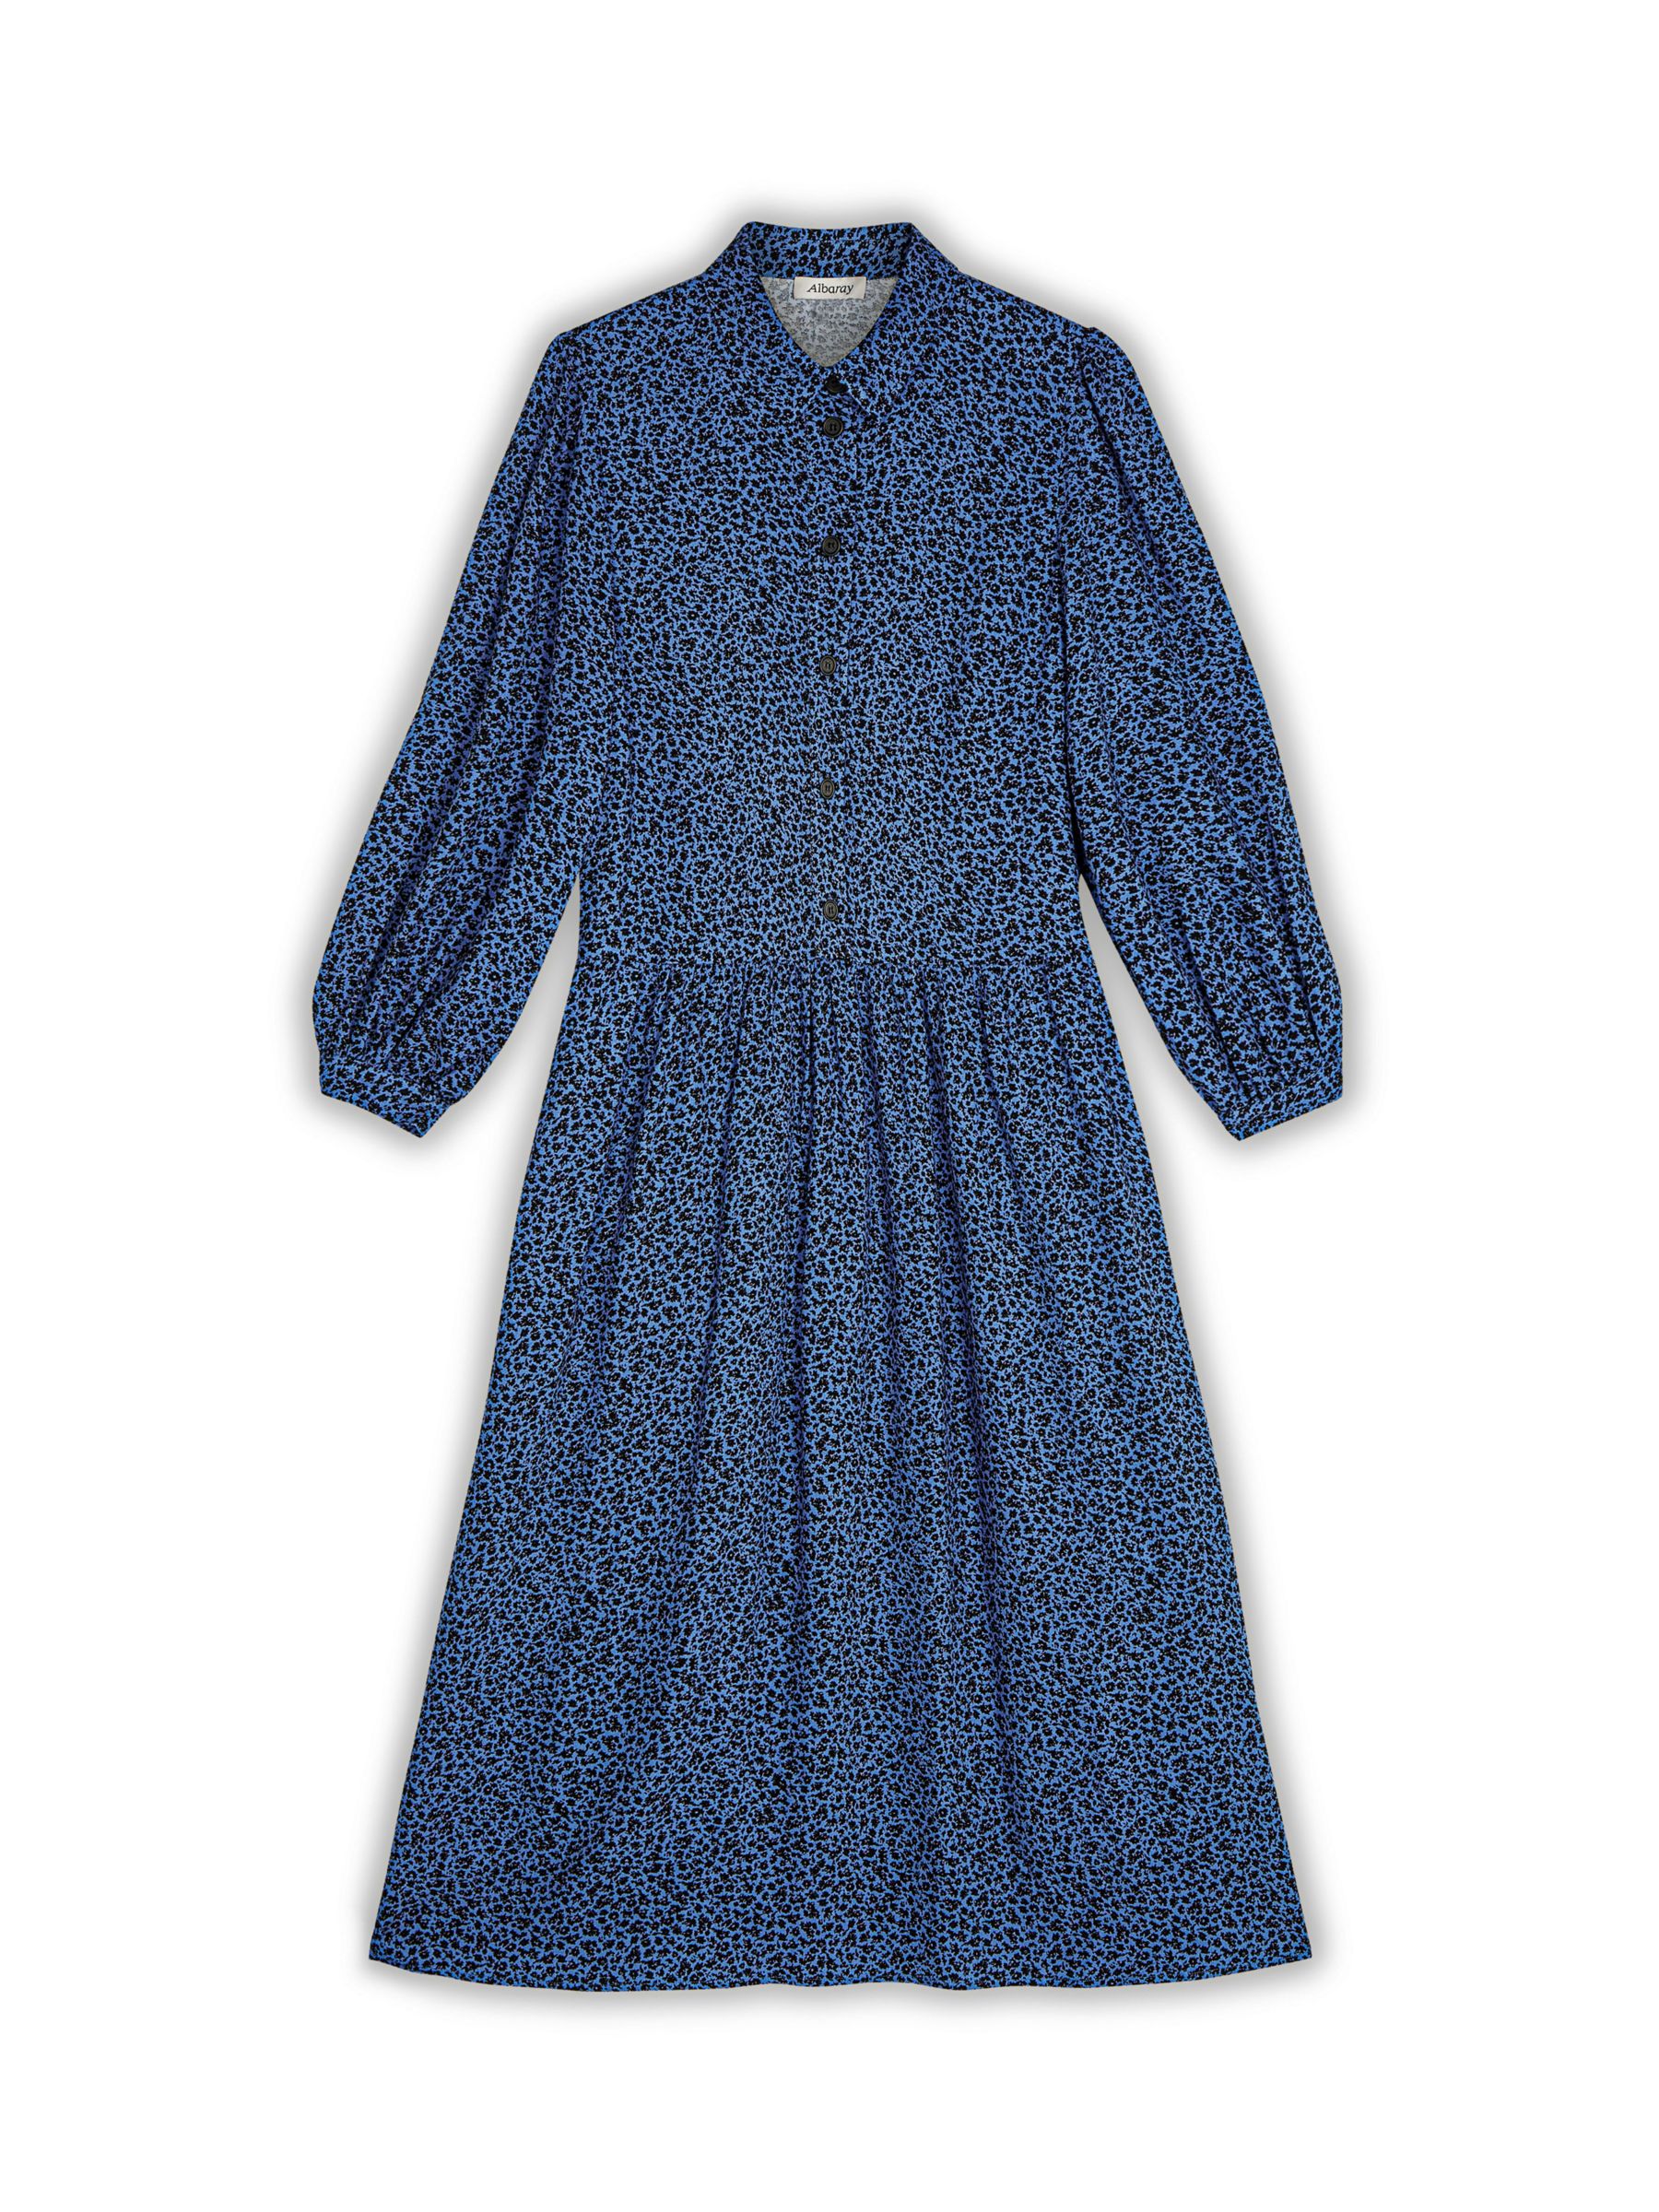 Albaray Maya Floral Drop Waist Dress, Blue at John Lewis & Partners